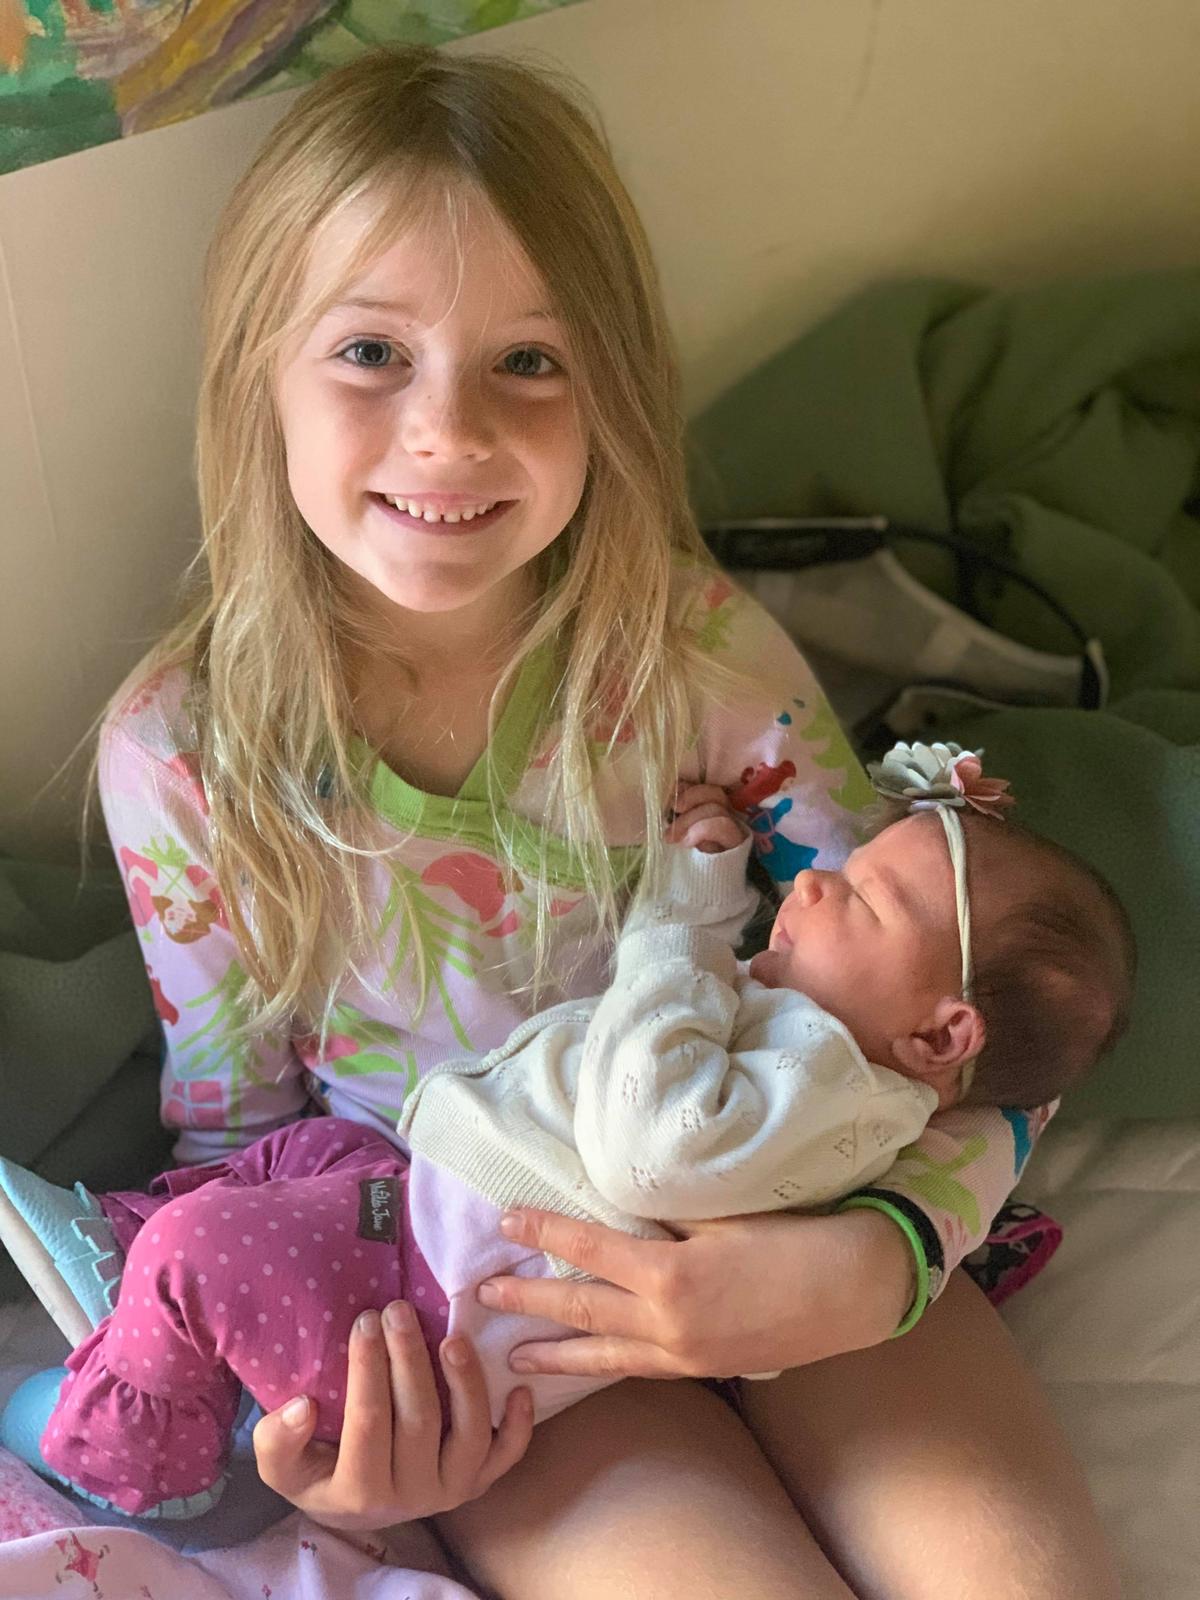 Big sister Zinnia holding baby Azalea (Courtesy of <a href="https://www.facebook.com/erin.f.gray">the Gray Family</a>)